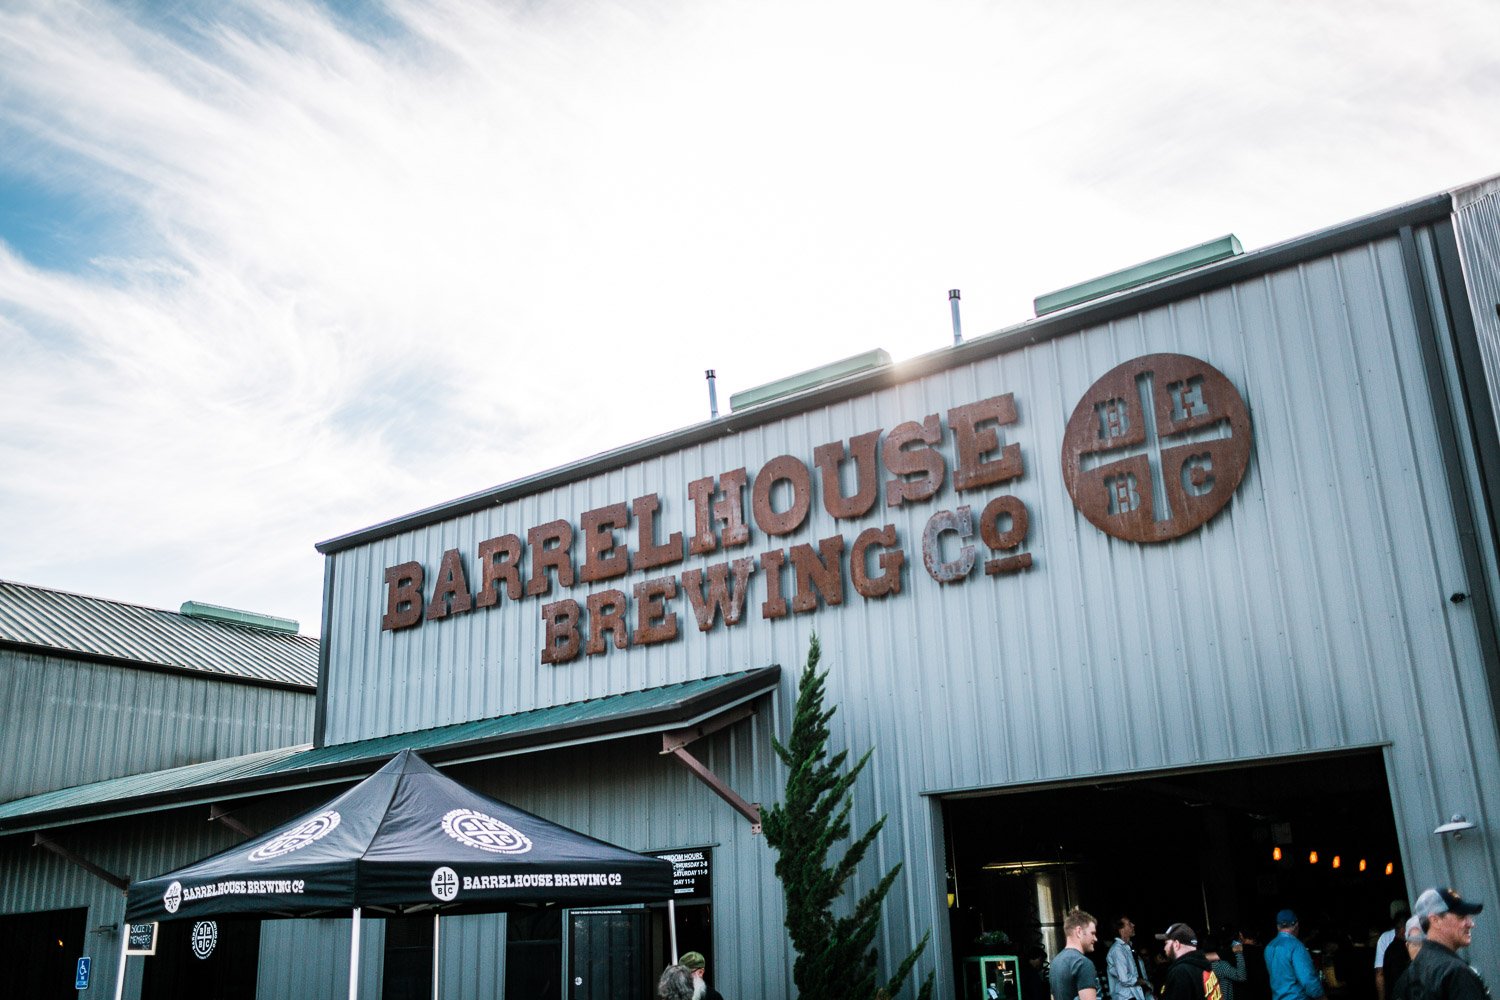 BarrelHouse Brewing Co. Main entrance